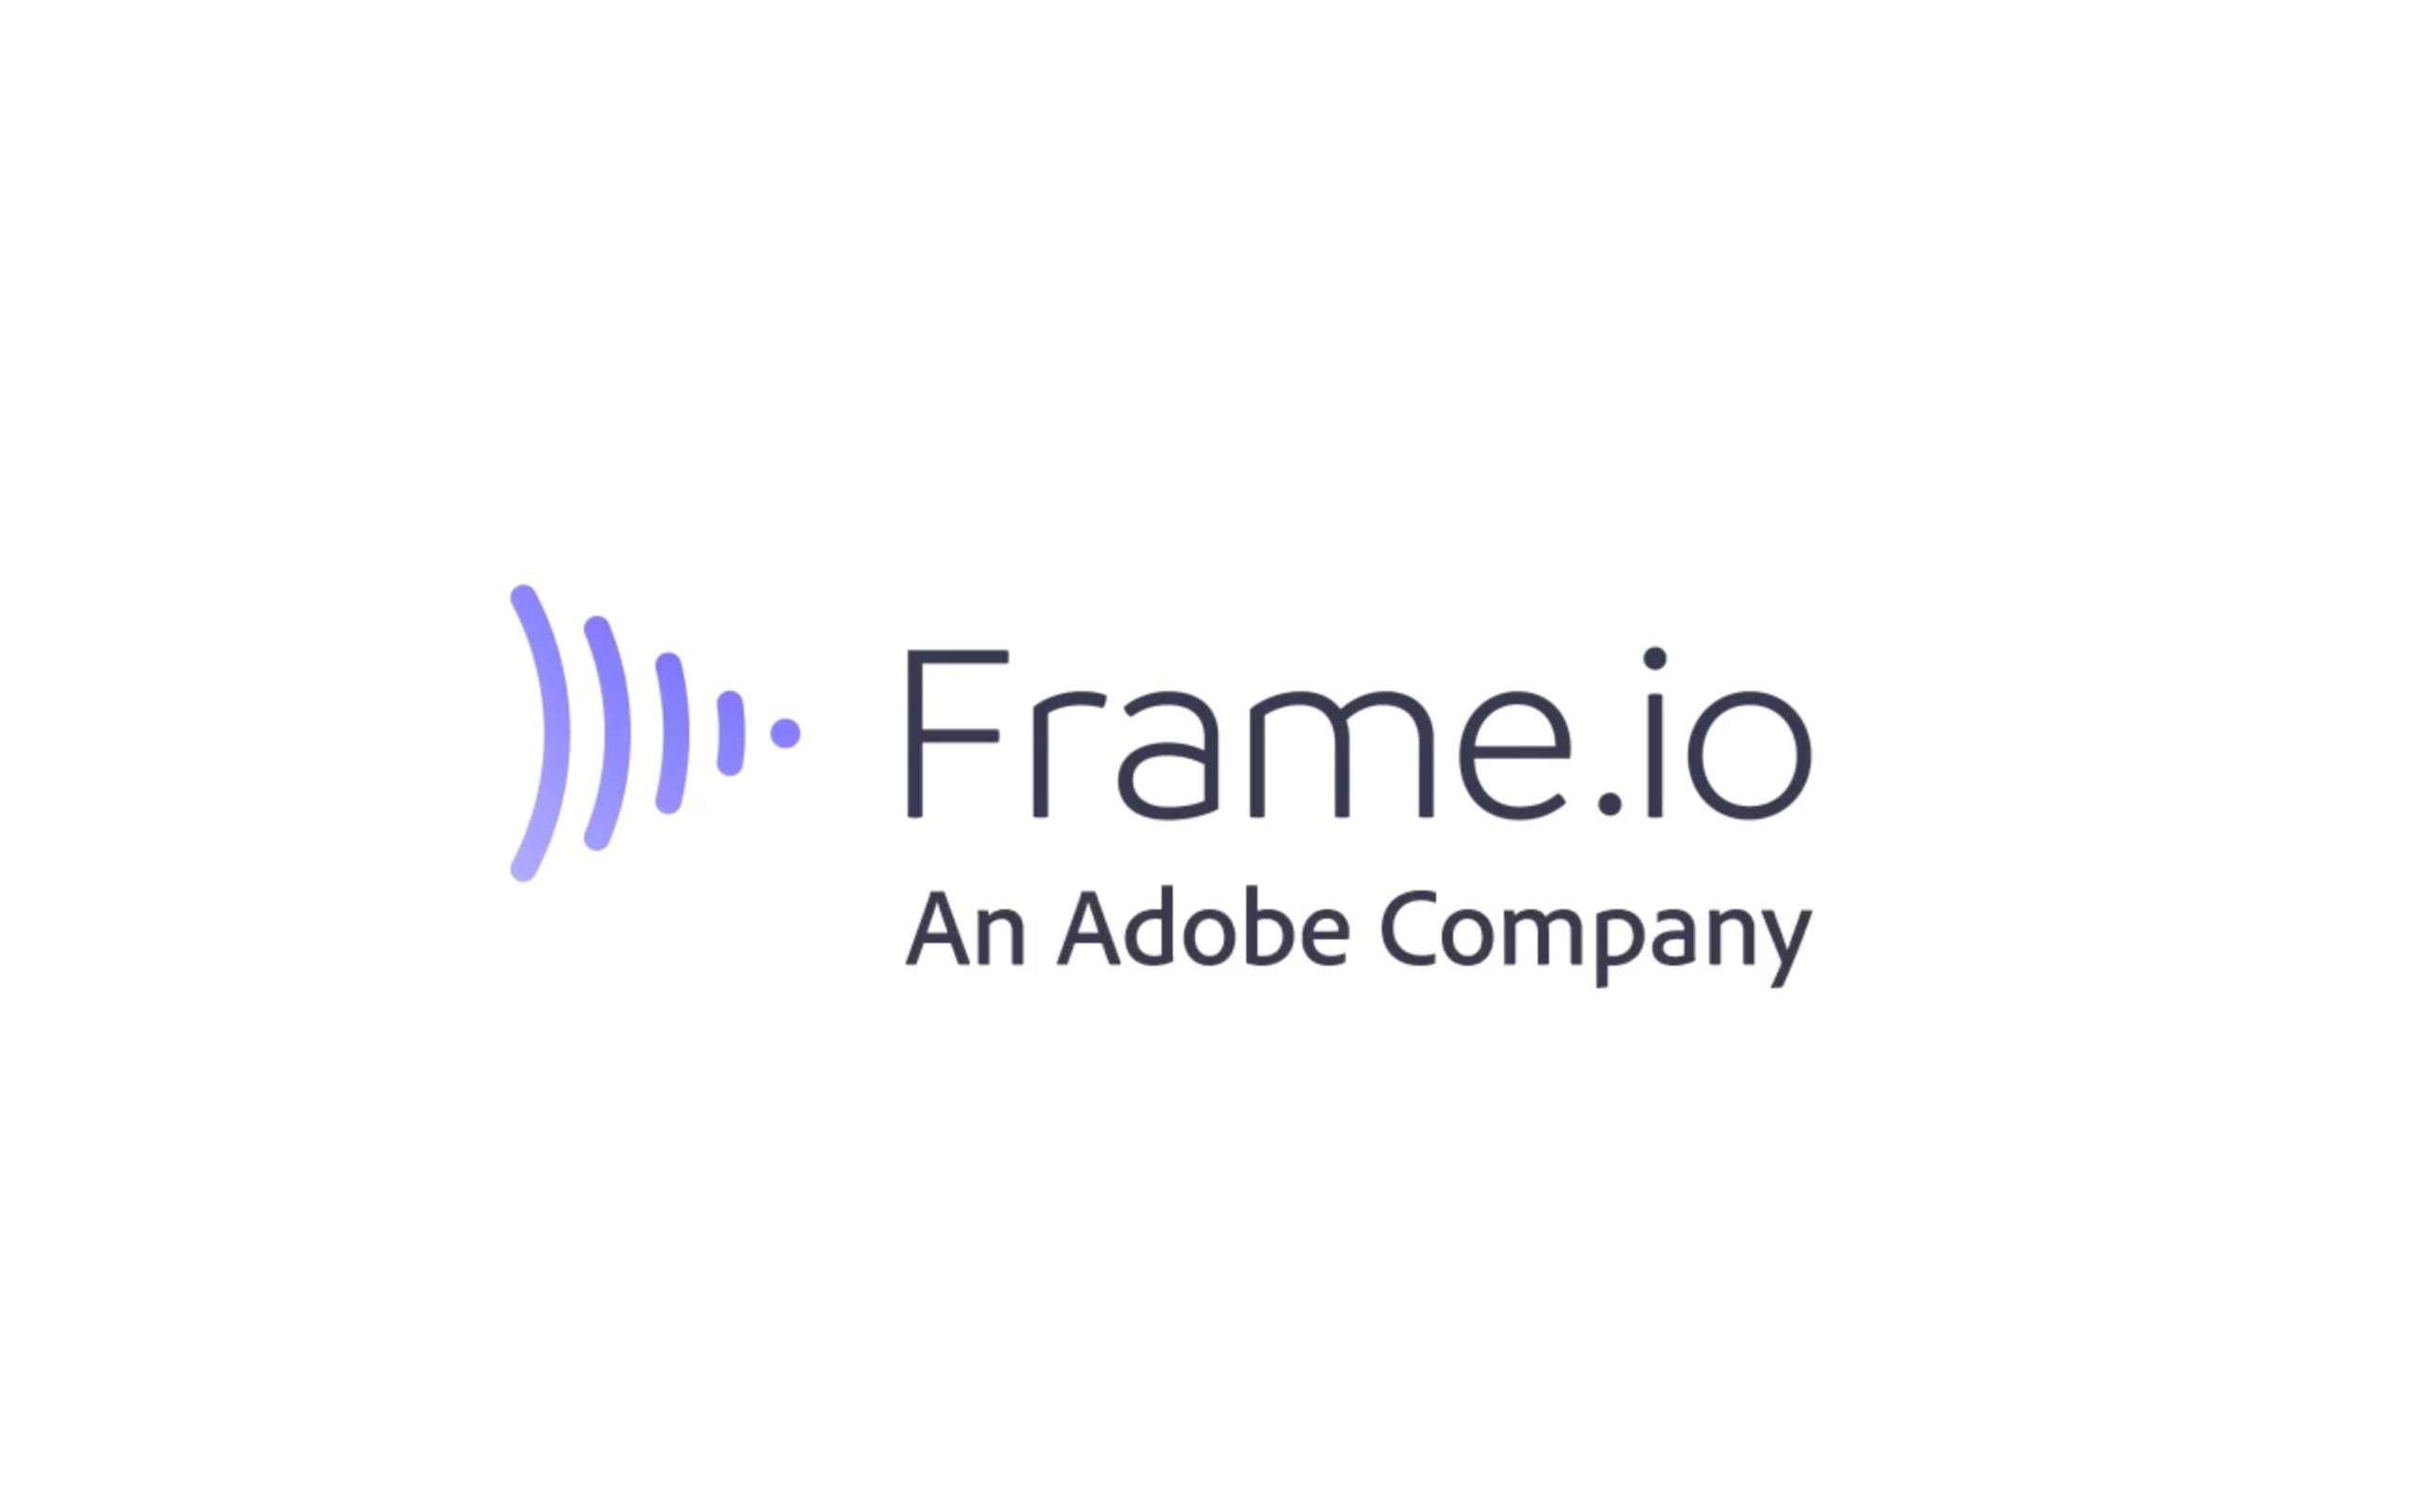 Adobe 完成对 Frame.io 的收购